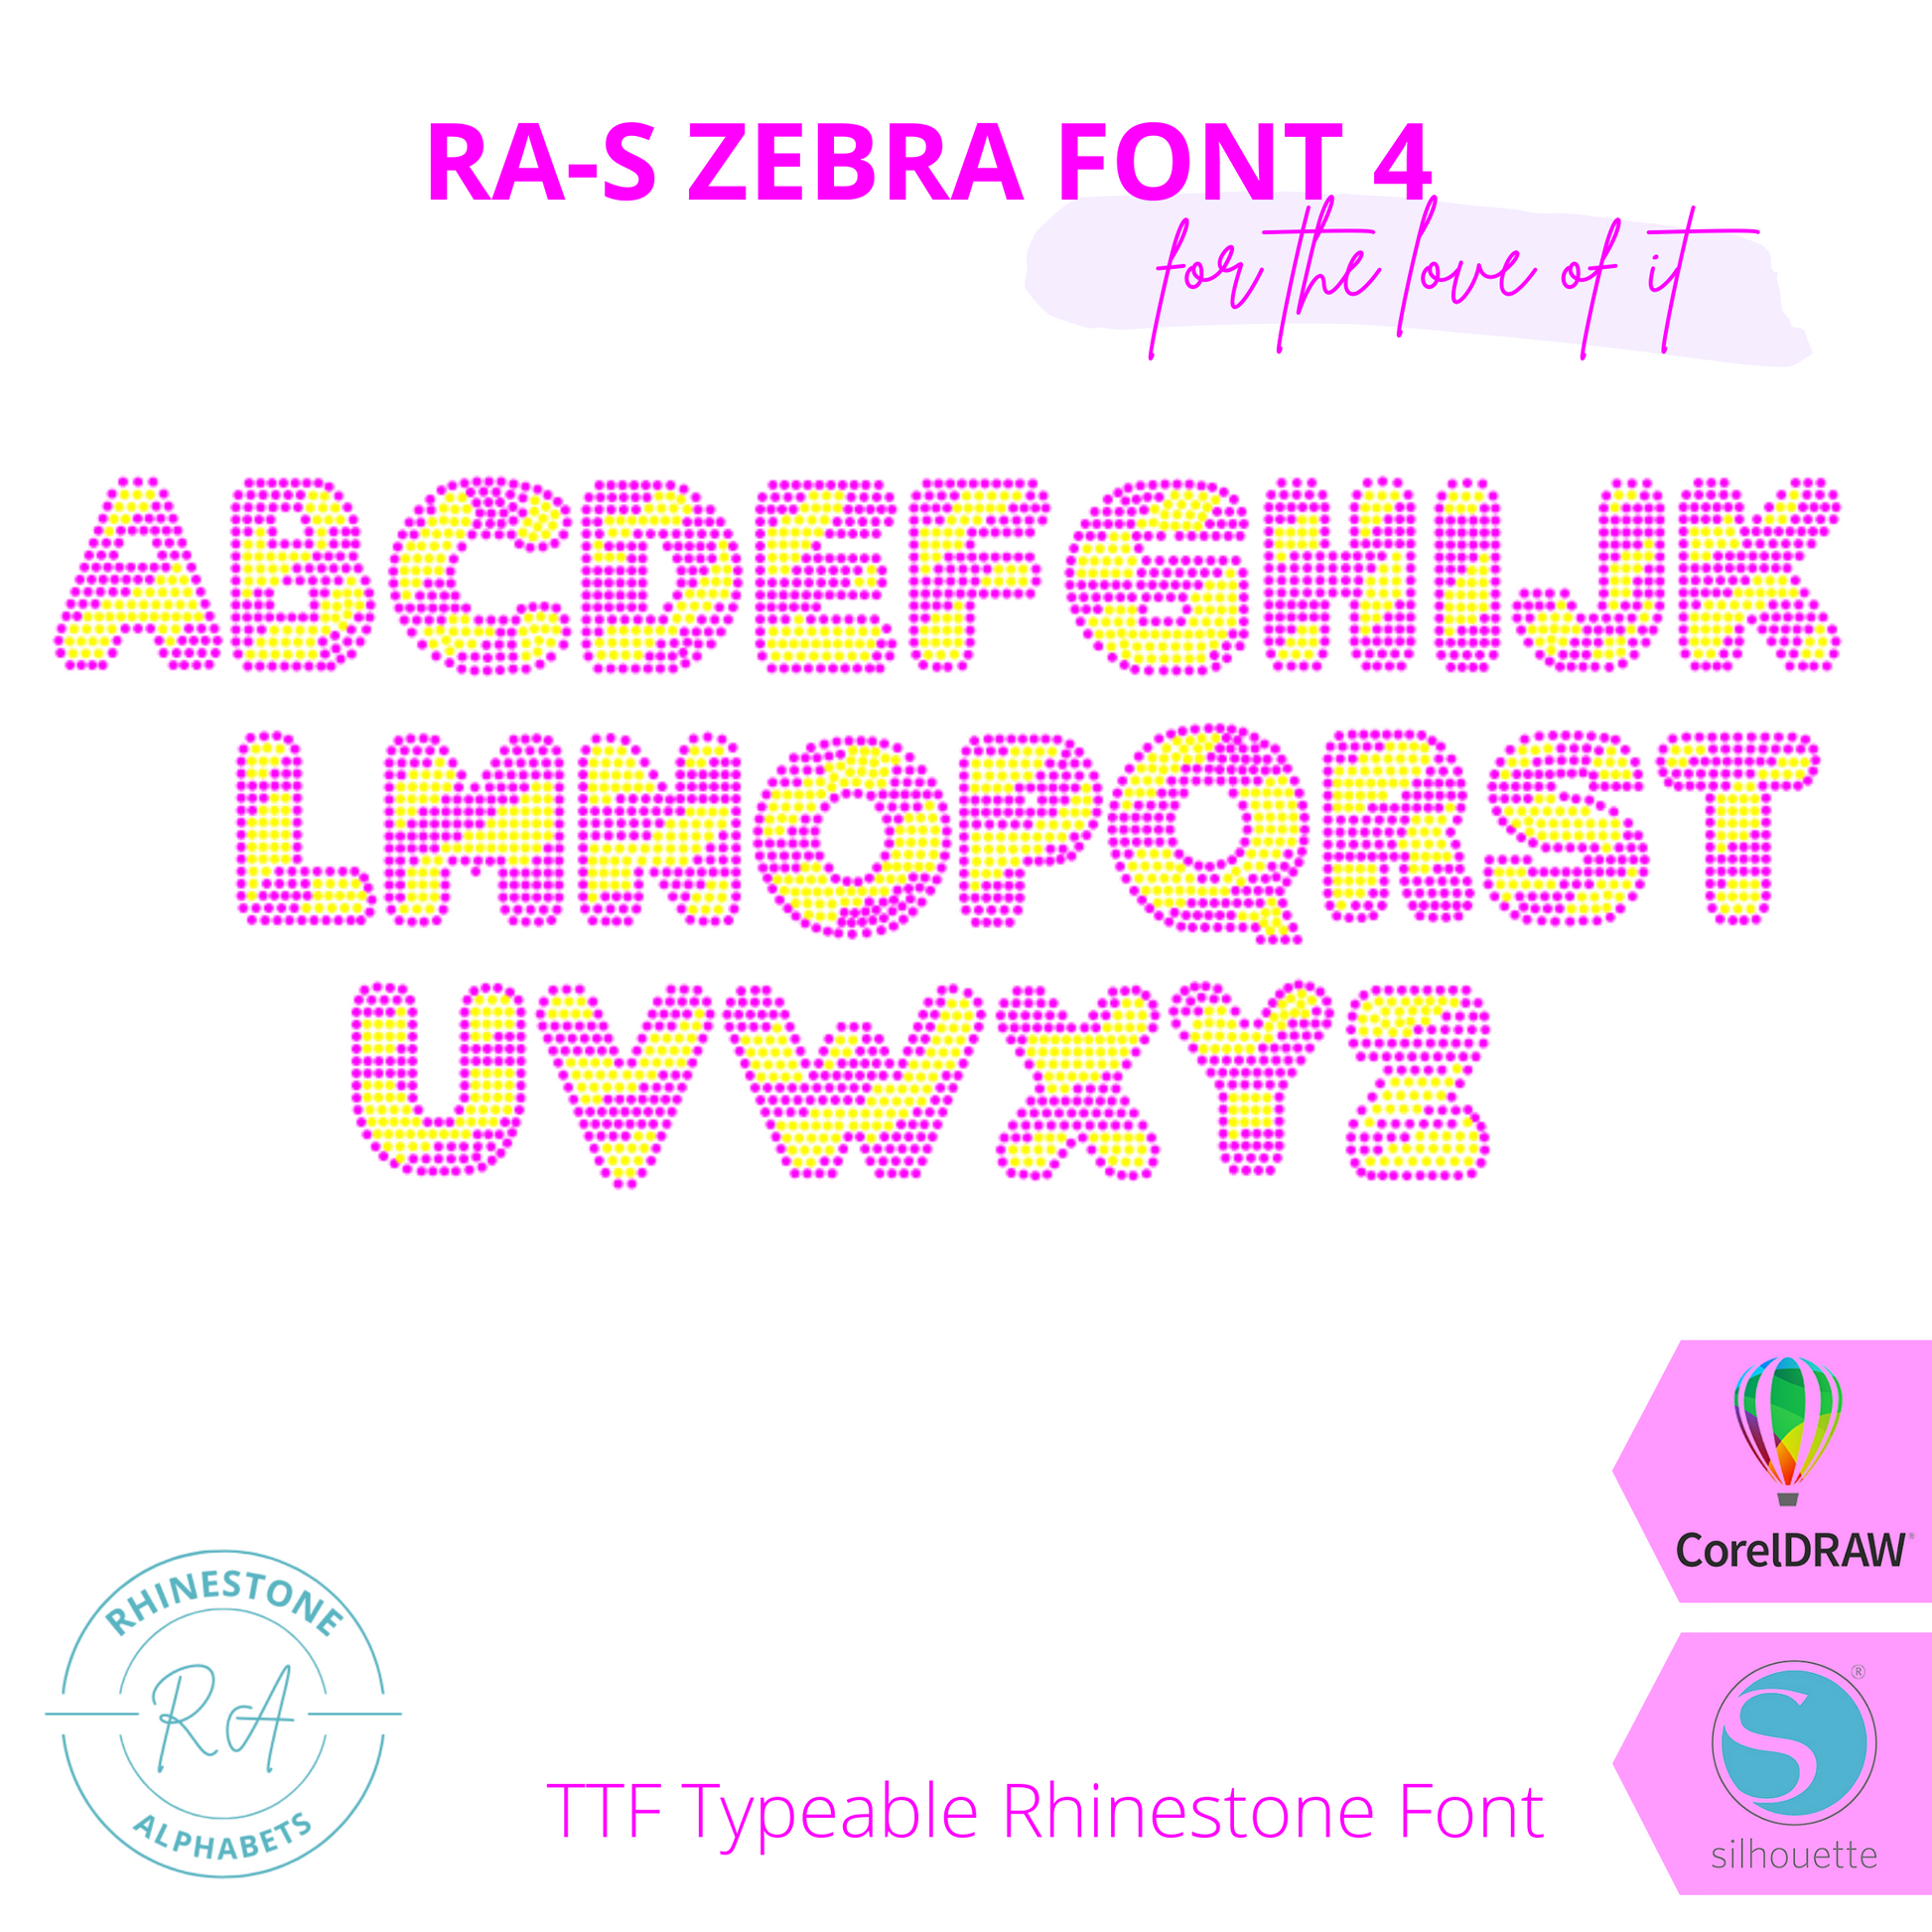 RA-S Zebra Font 4 - RhinestoneAlphabets